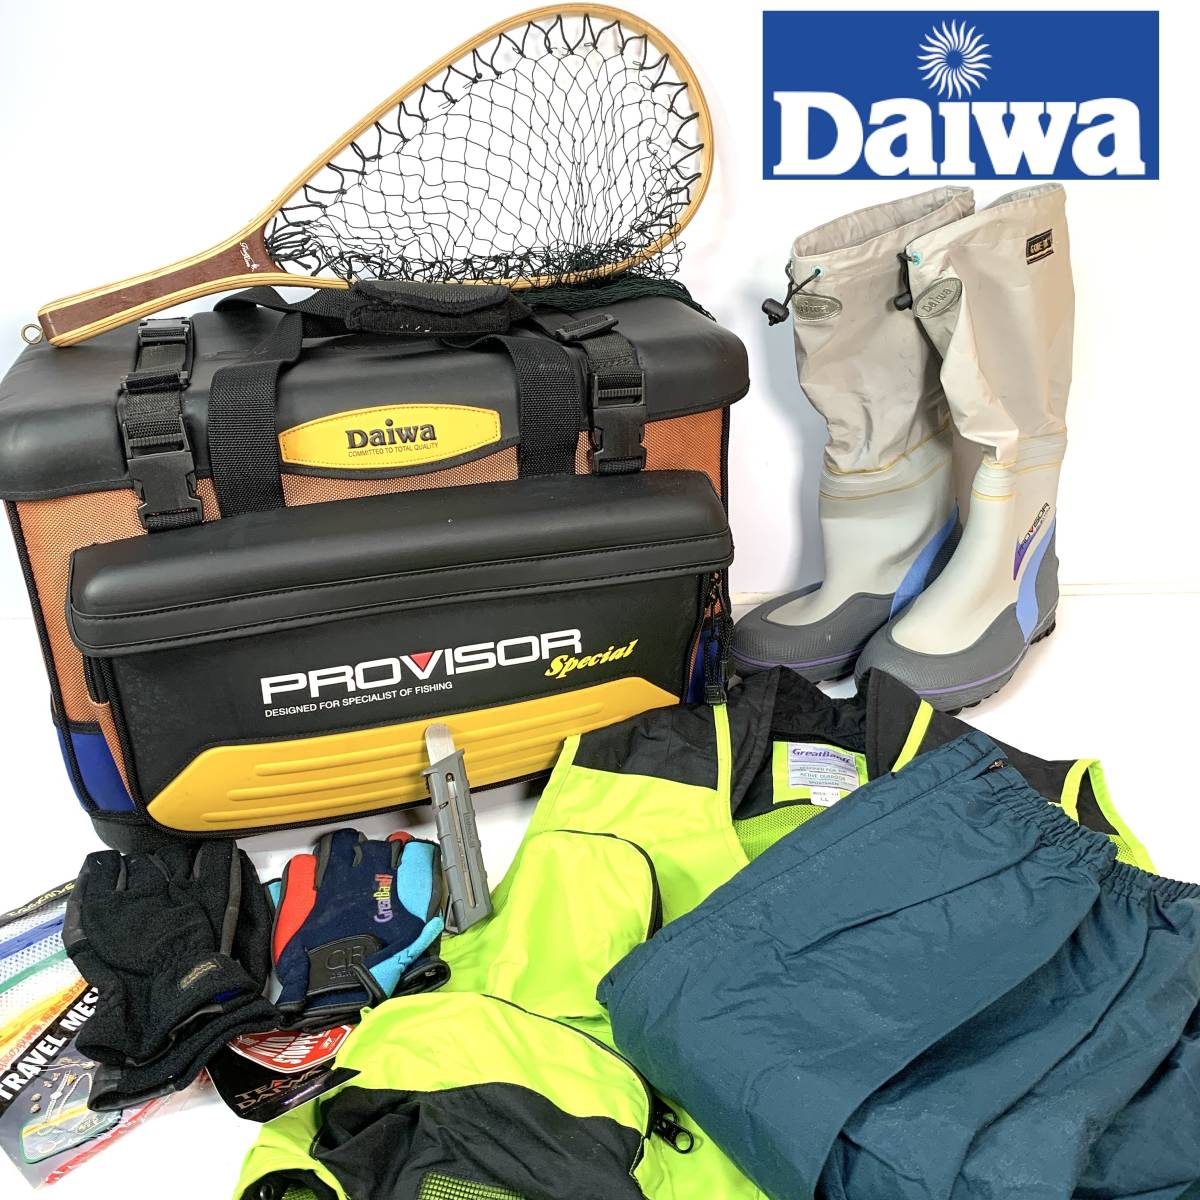 Daiwa] summarize Daiwa PROVISOR Special cool back /GREAT BANFF the best  [LL] trousers [L] boots PROVISOR[26cm] fishing fishing used : Real Yahoo  auction salling